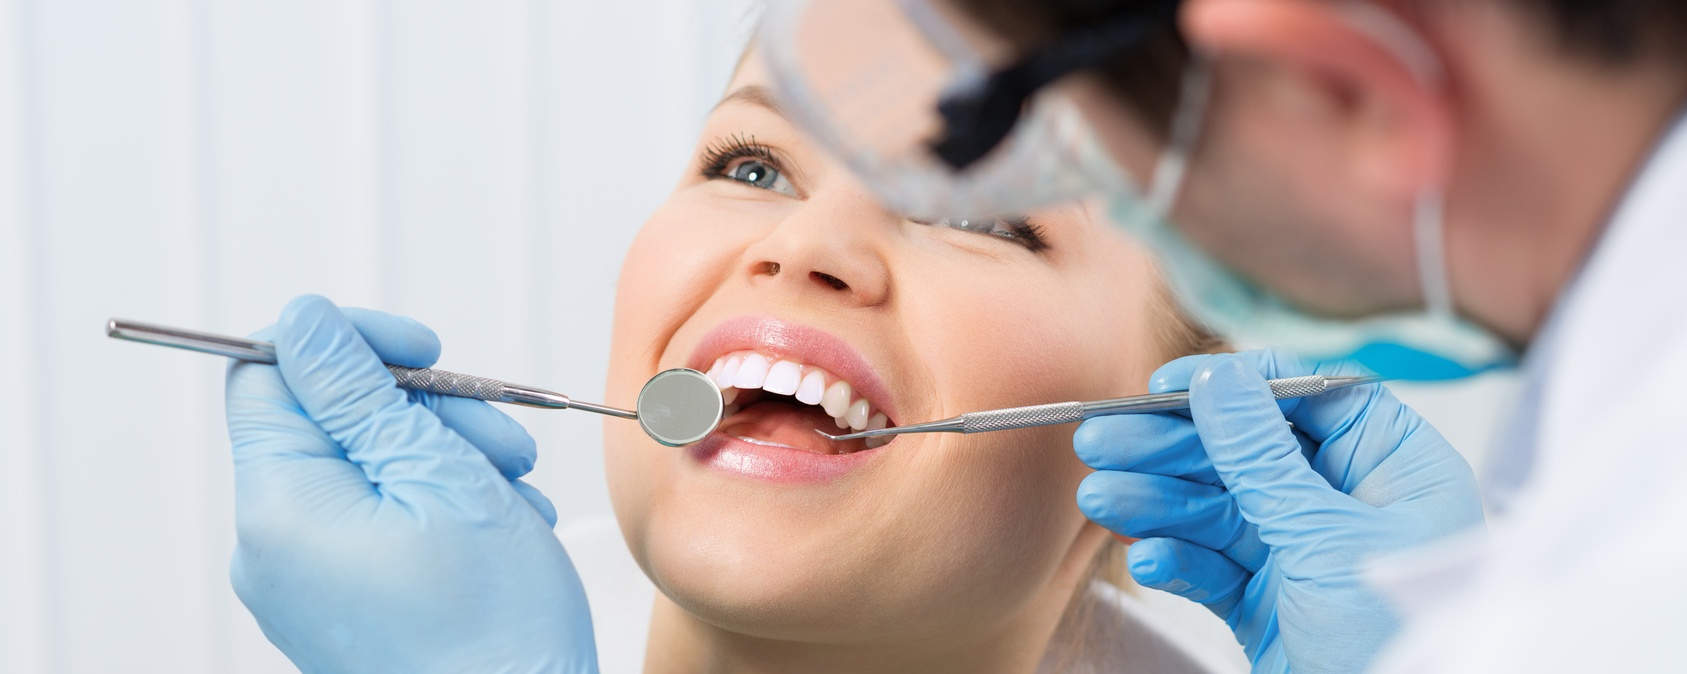 Wisdom Teeth Removal Post Care